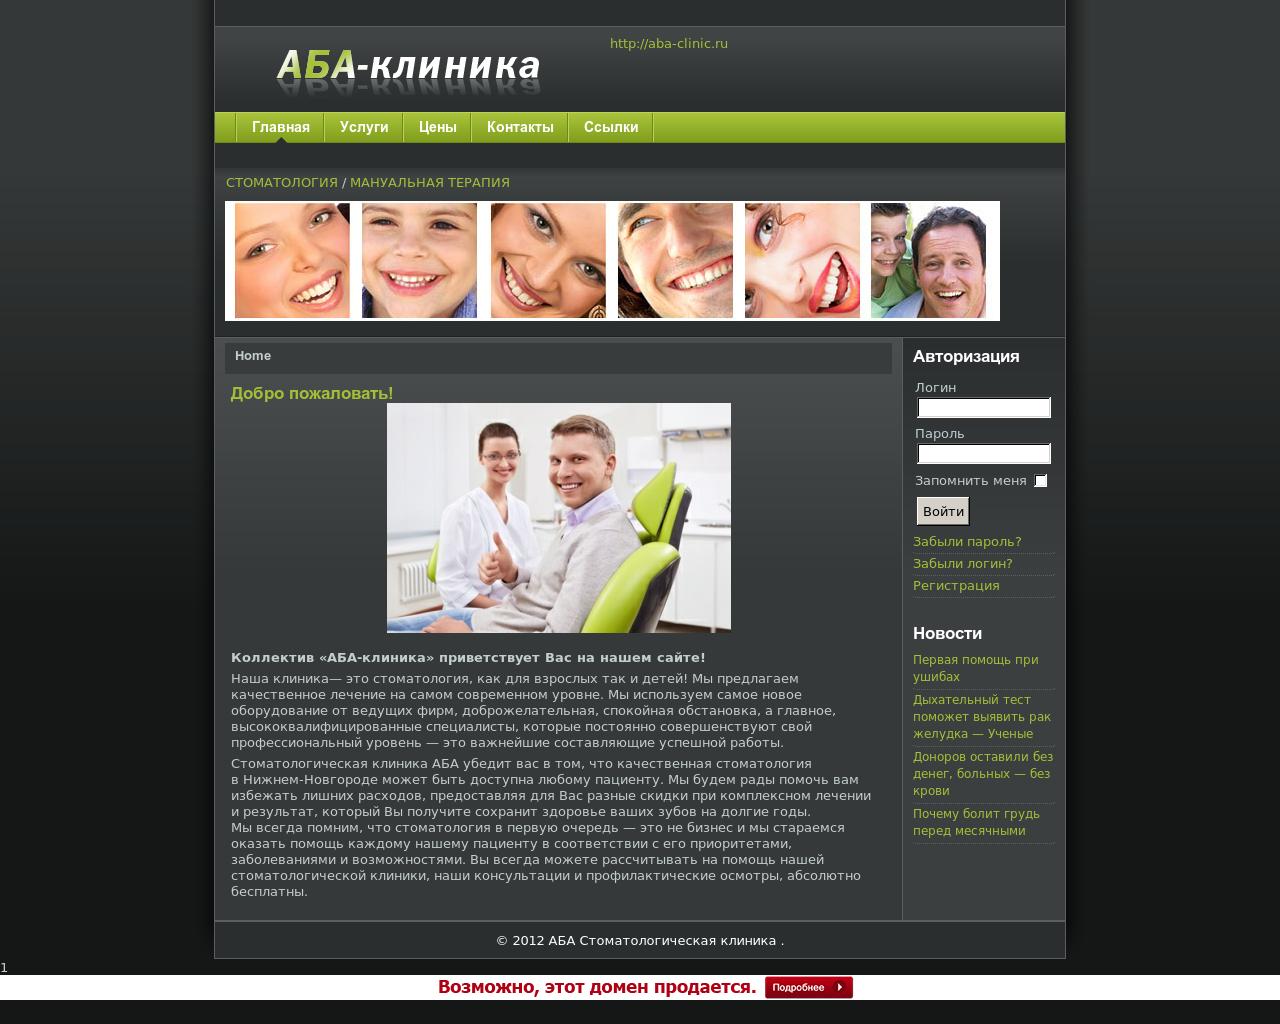 Изображение сайта aba-clinic.ru в разрешении 1280x1024